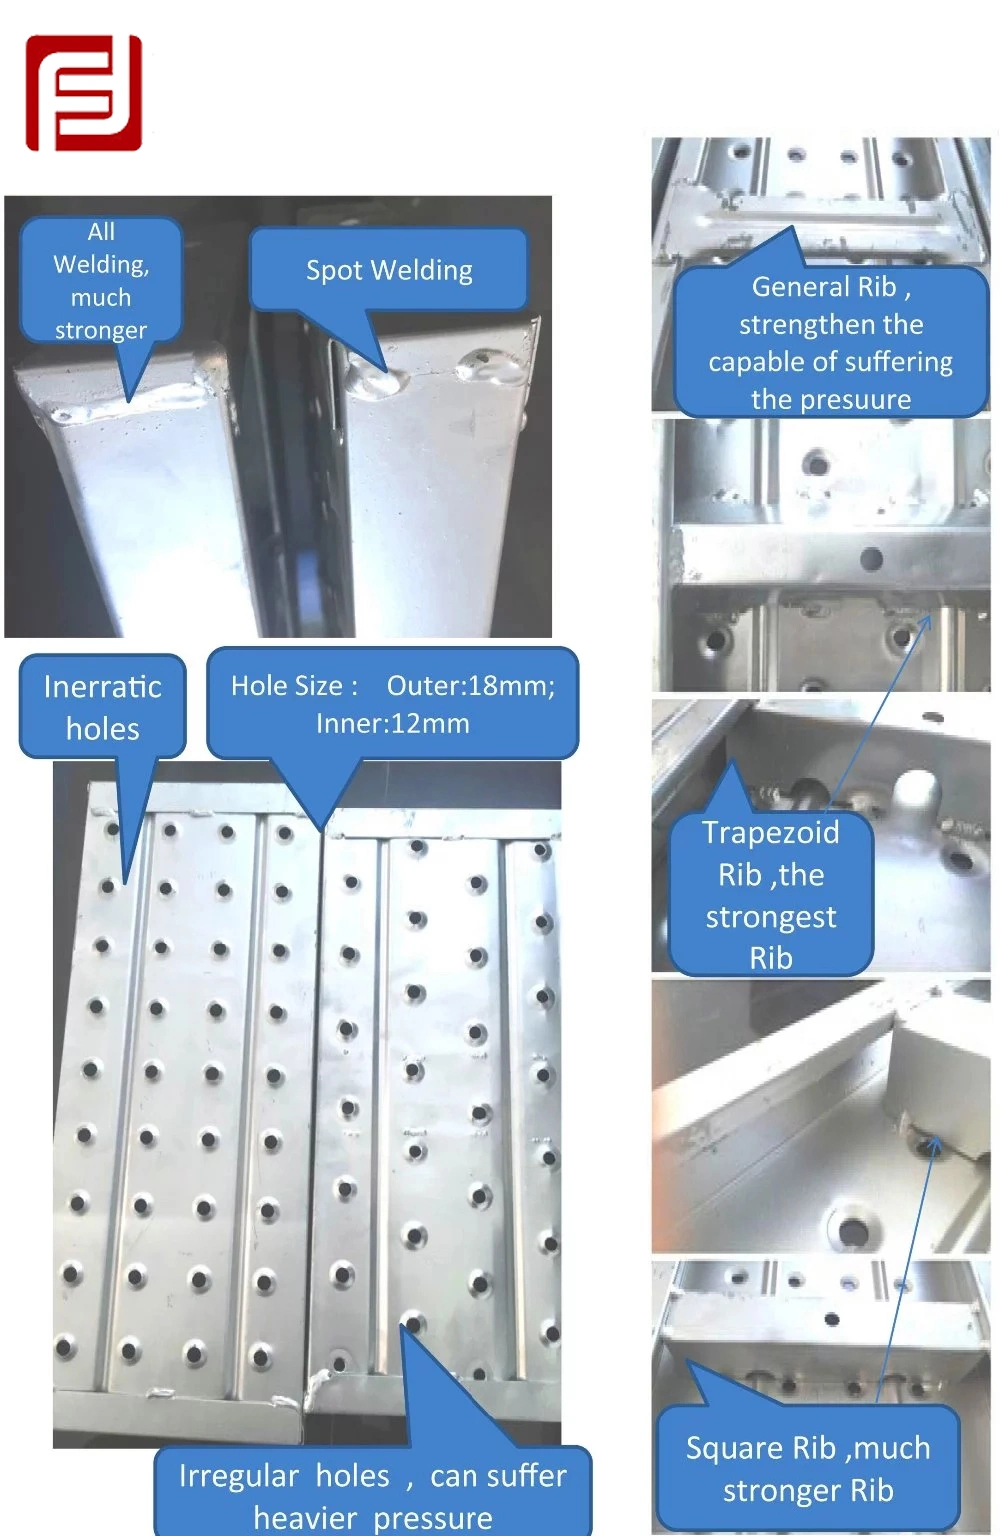 Lower Price Metal Decking Board Construction Scaffold Galvanized Steel Scaffolding Planks